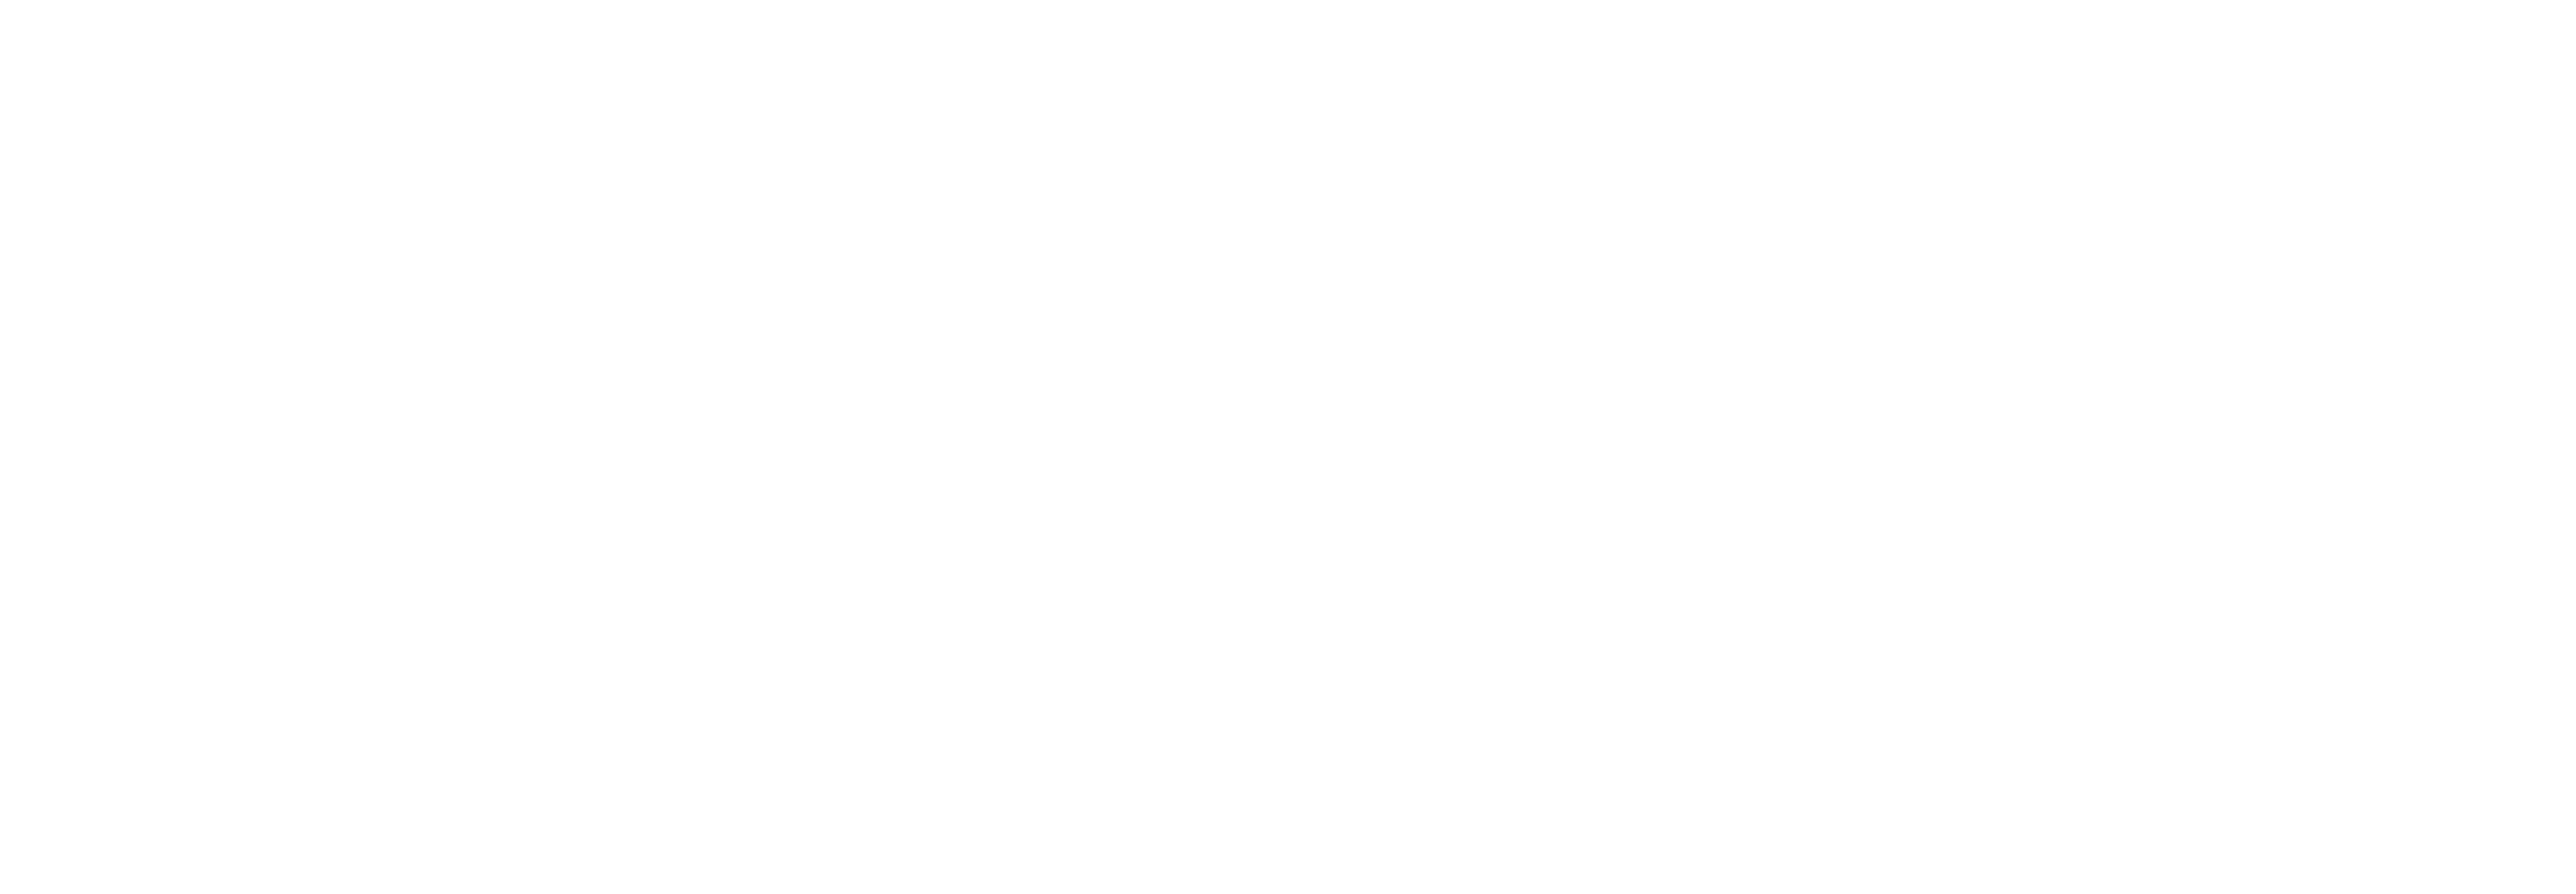 Indian Biogas Association